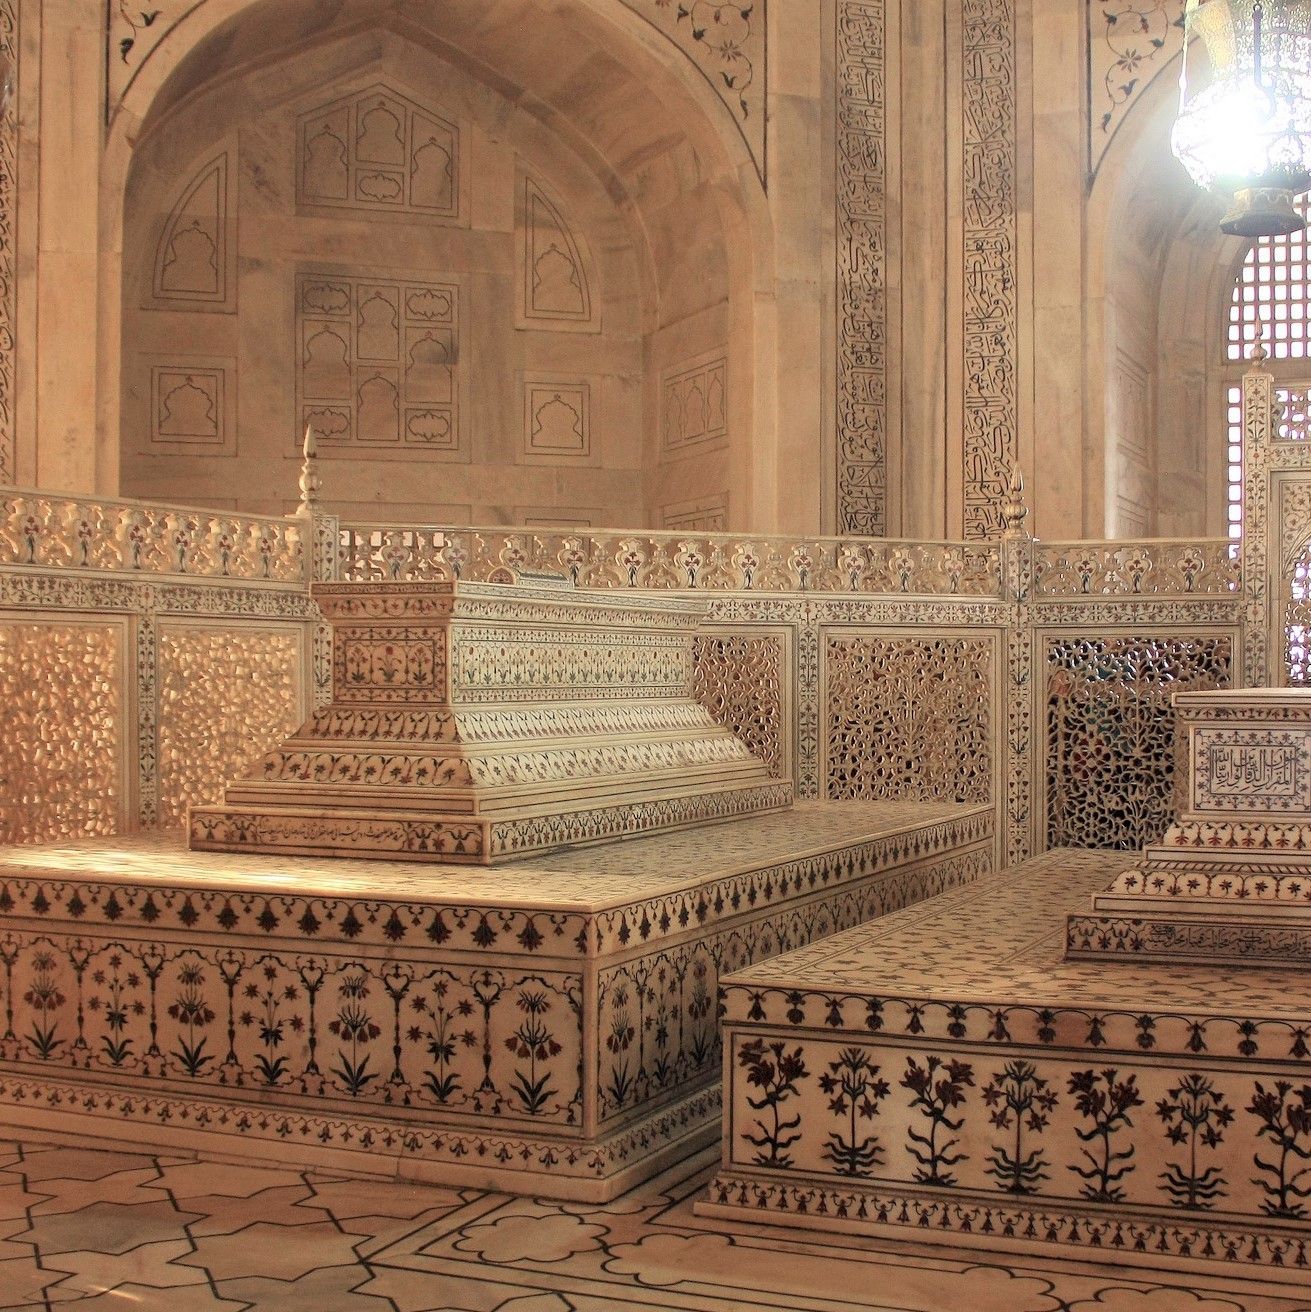 Tomb chamber of the Mughal Emperor Shah Jahan and Empress Mumtaz Mahal in Taj Mahal